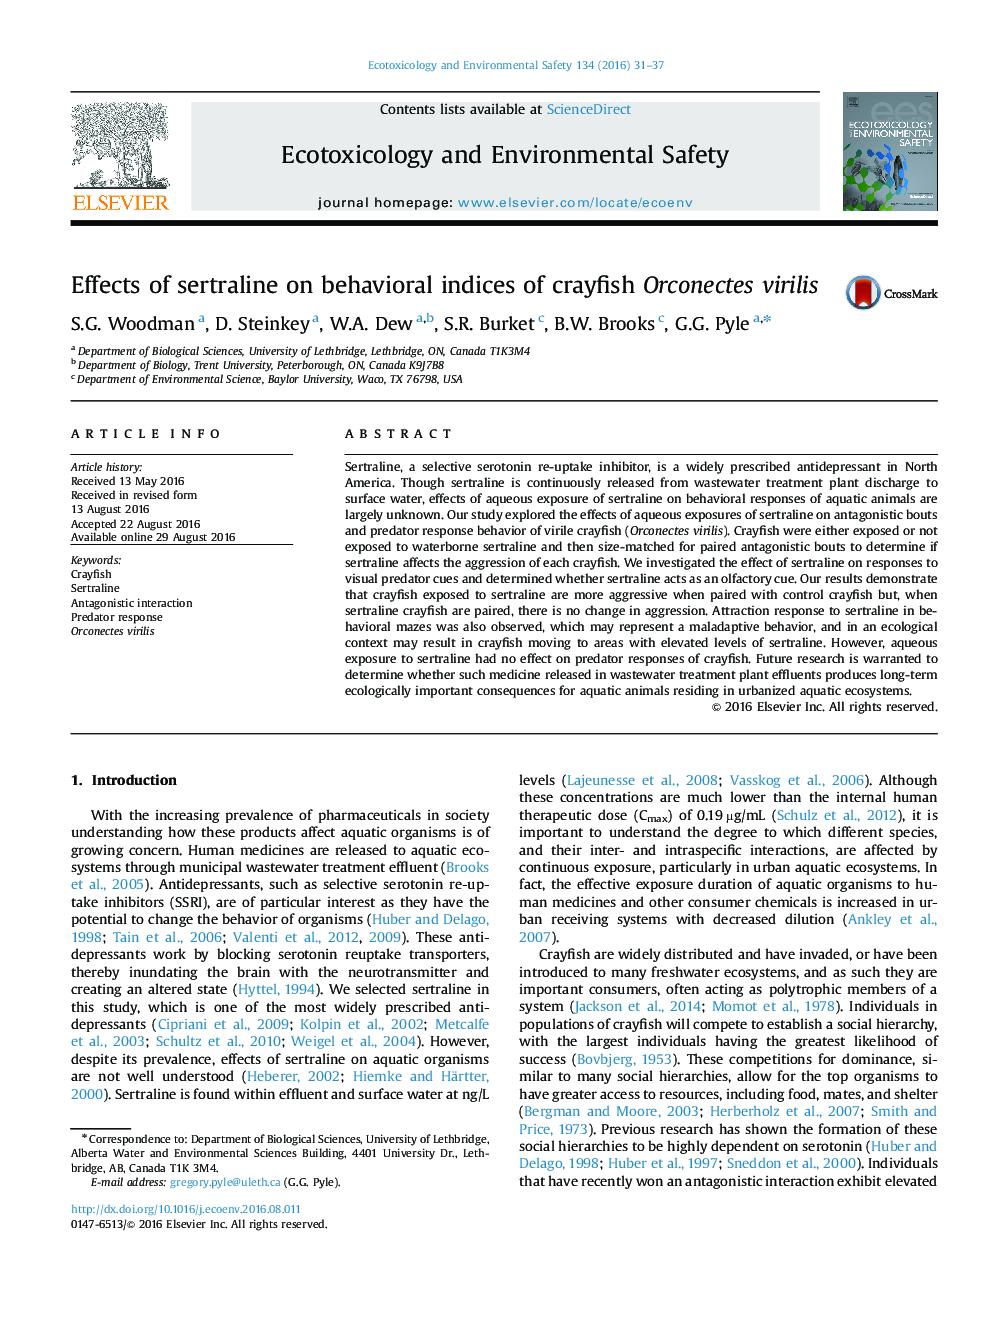 Effects of sertraline on behavioral indices of crayfish Orconectes virilis